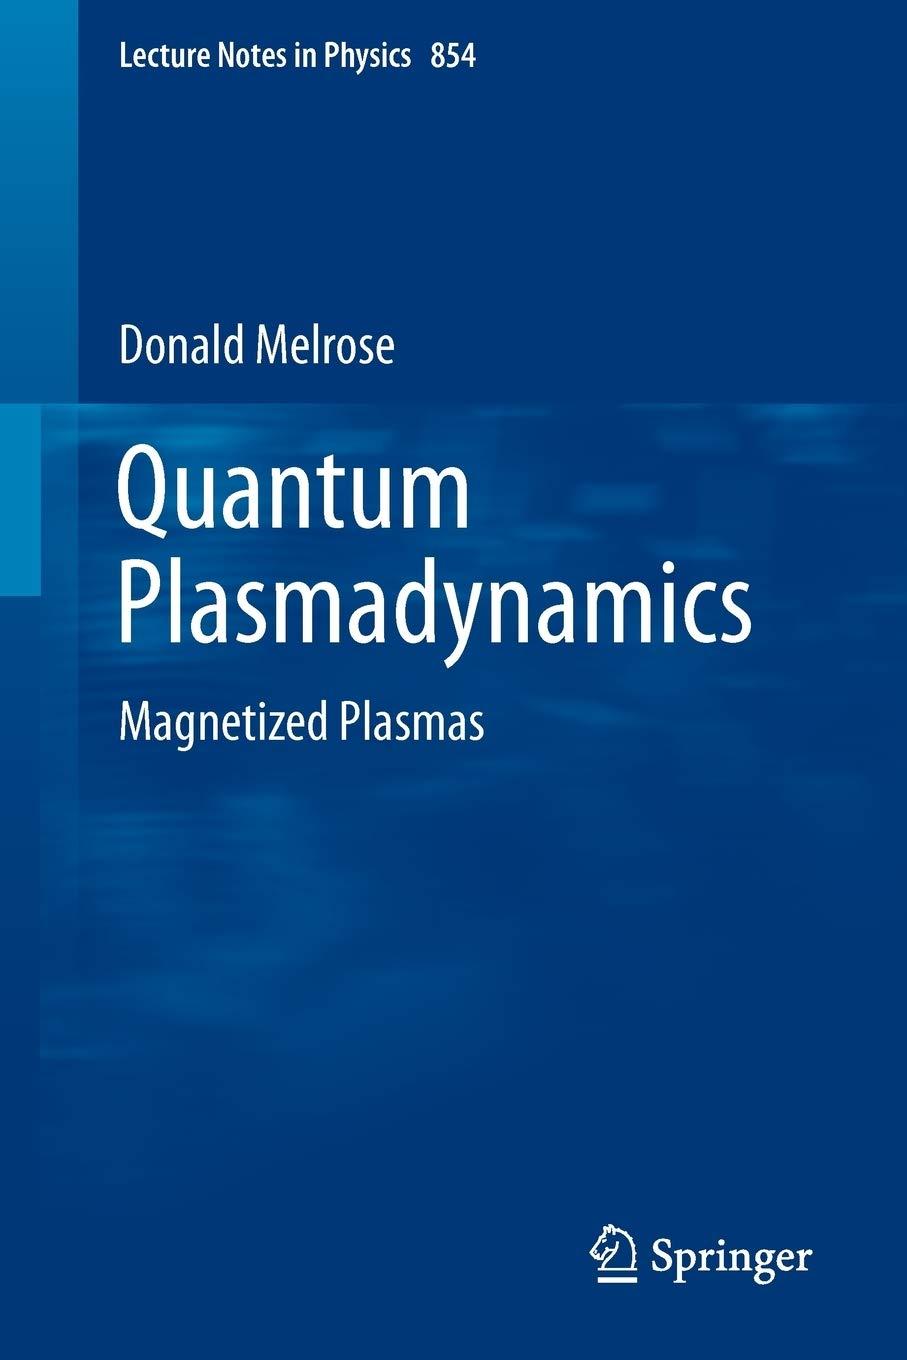 quantum plasmadynamics magnetized plasmas 1st edition donald melrose 1461440440, 978-1461440444